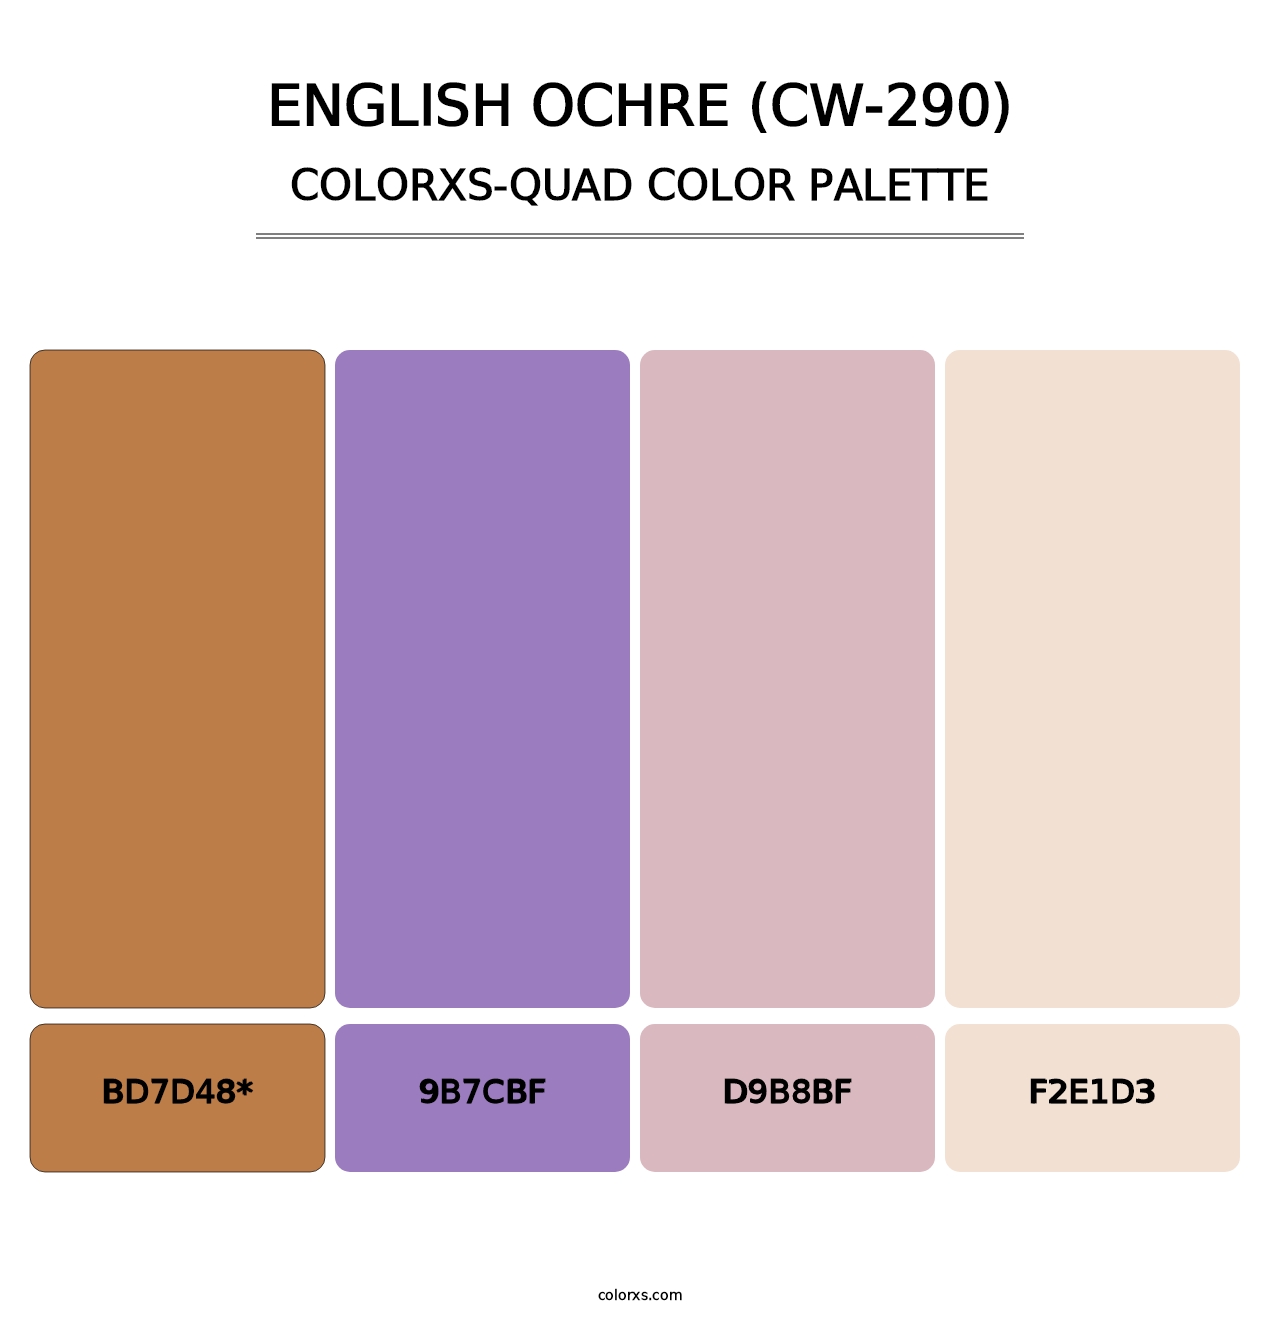 English Ochre (CW-290) - Colorxs Quad Palette